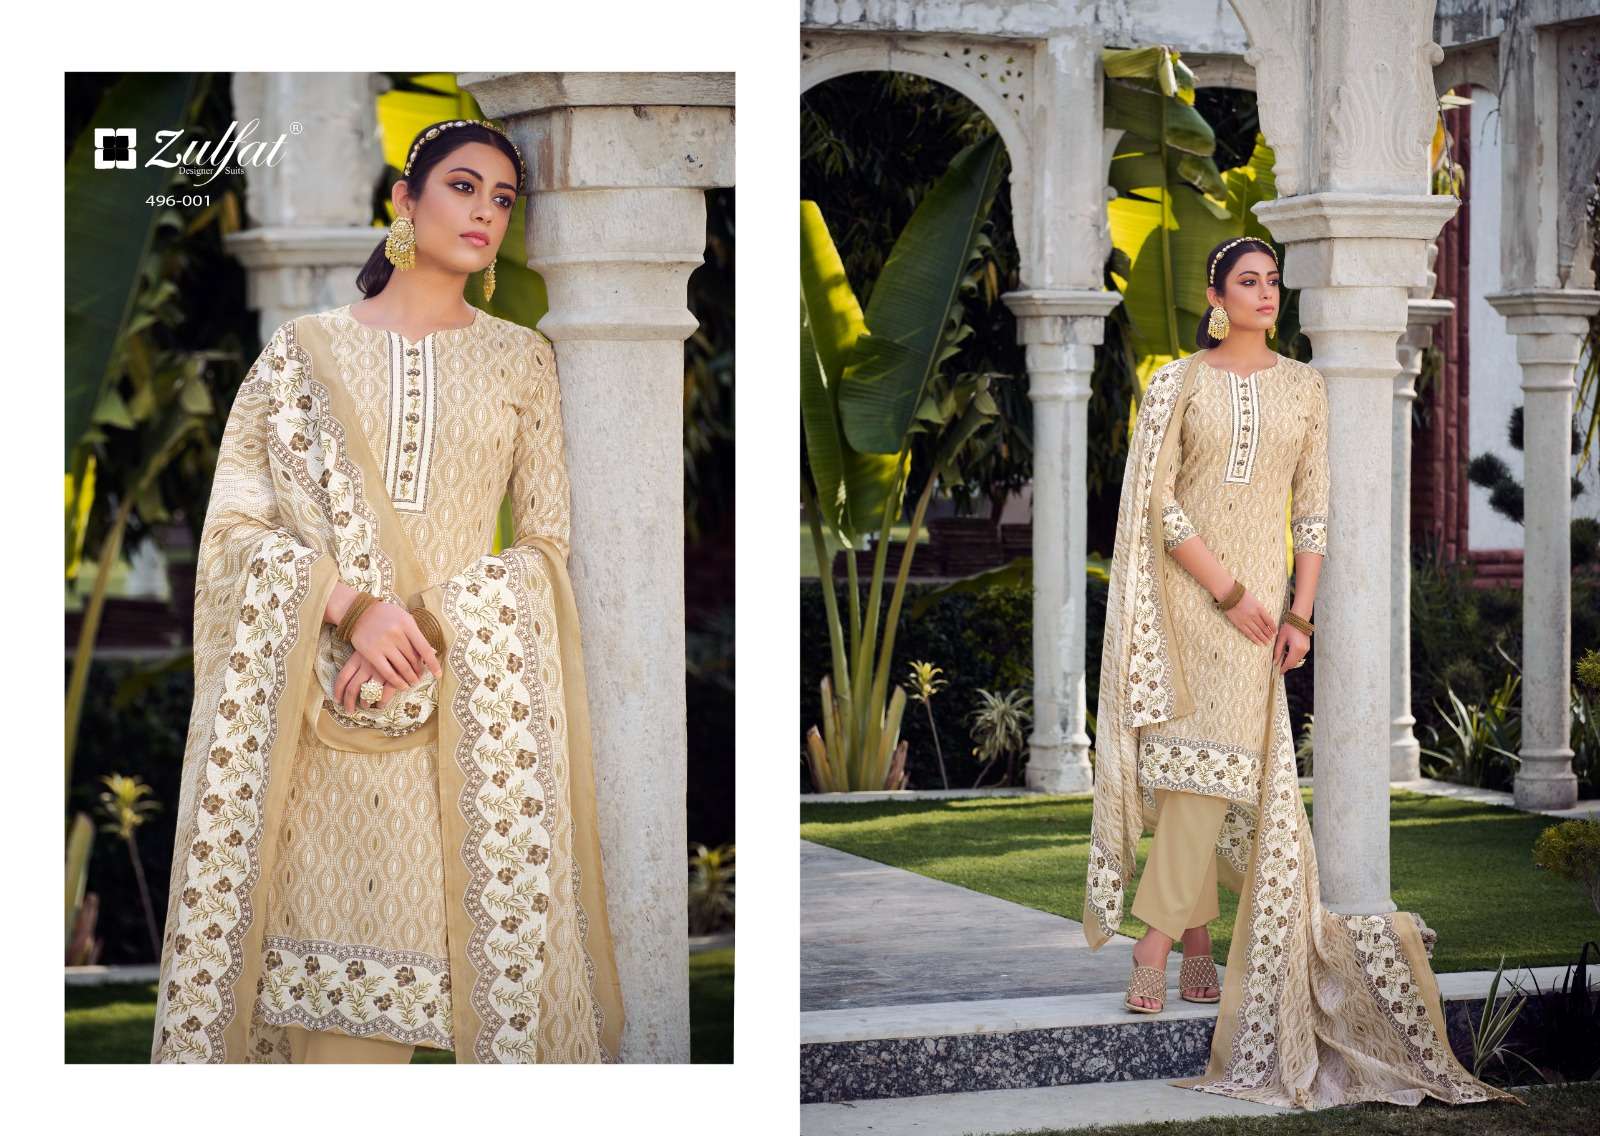 zulfat designer suits malang pure cotton designer salwar kameez latest catalogue 2023